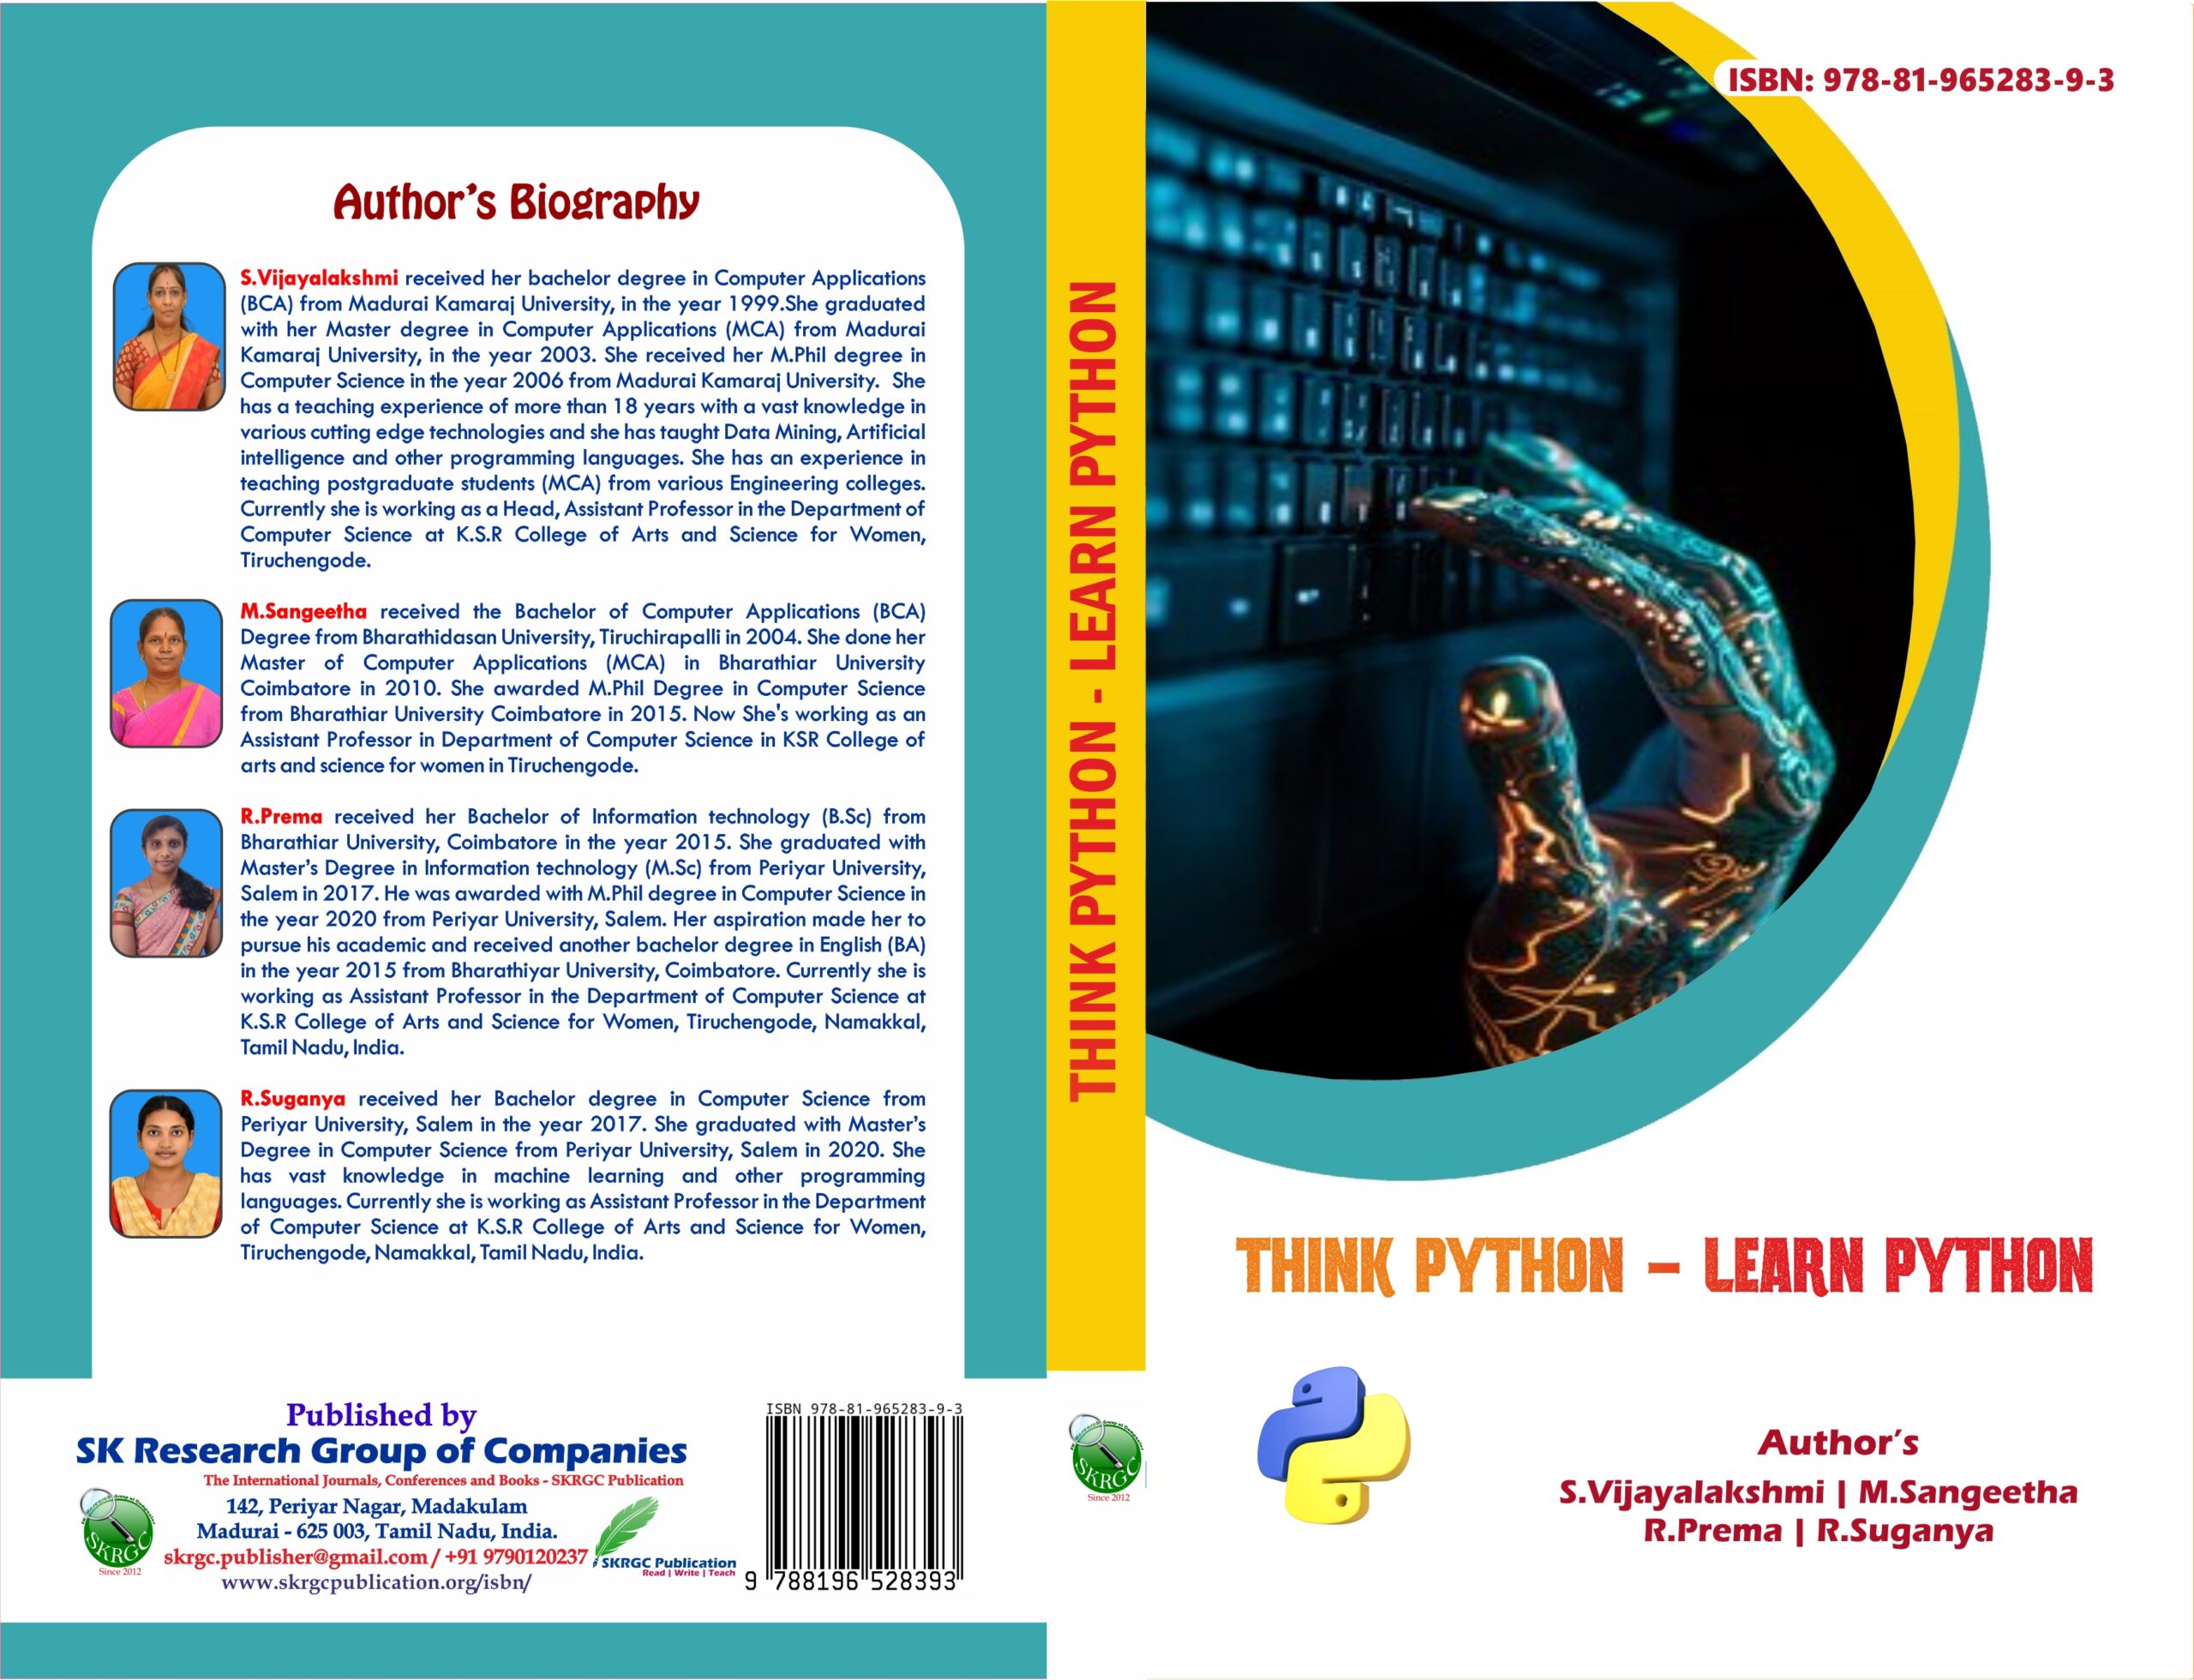 Think Python – Learn Python